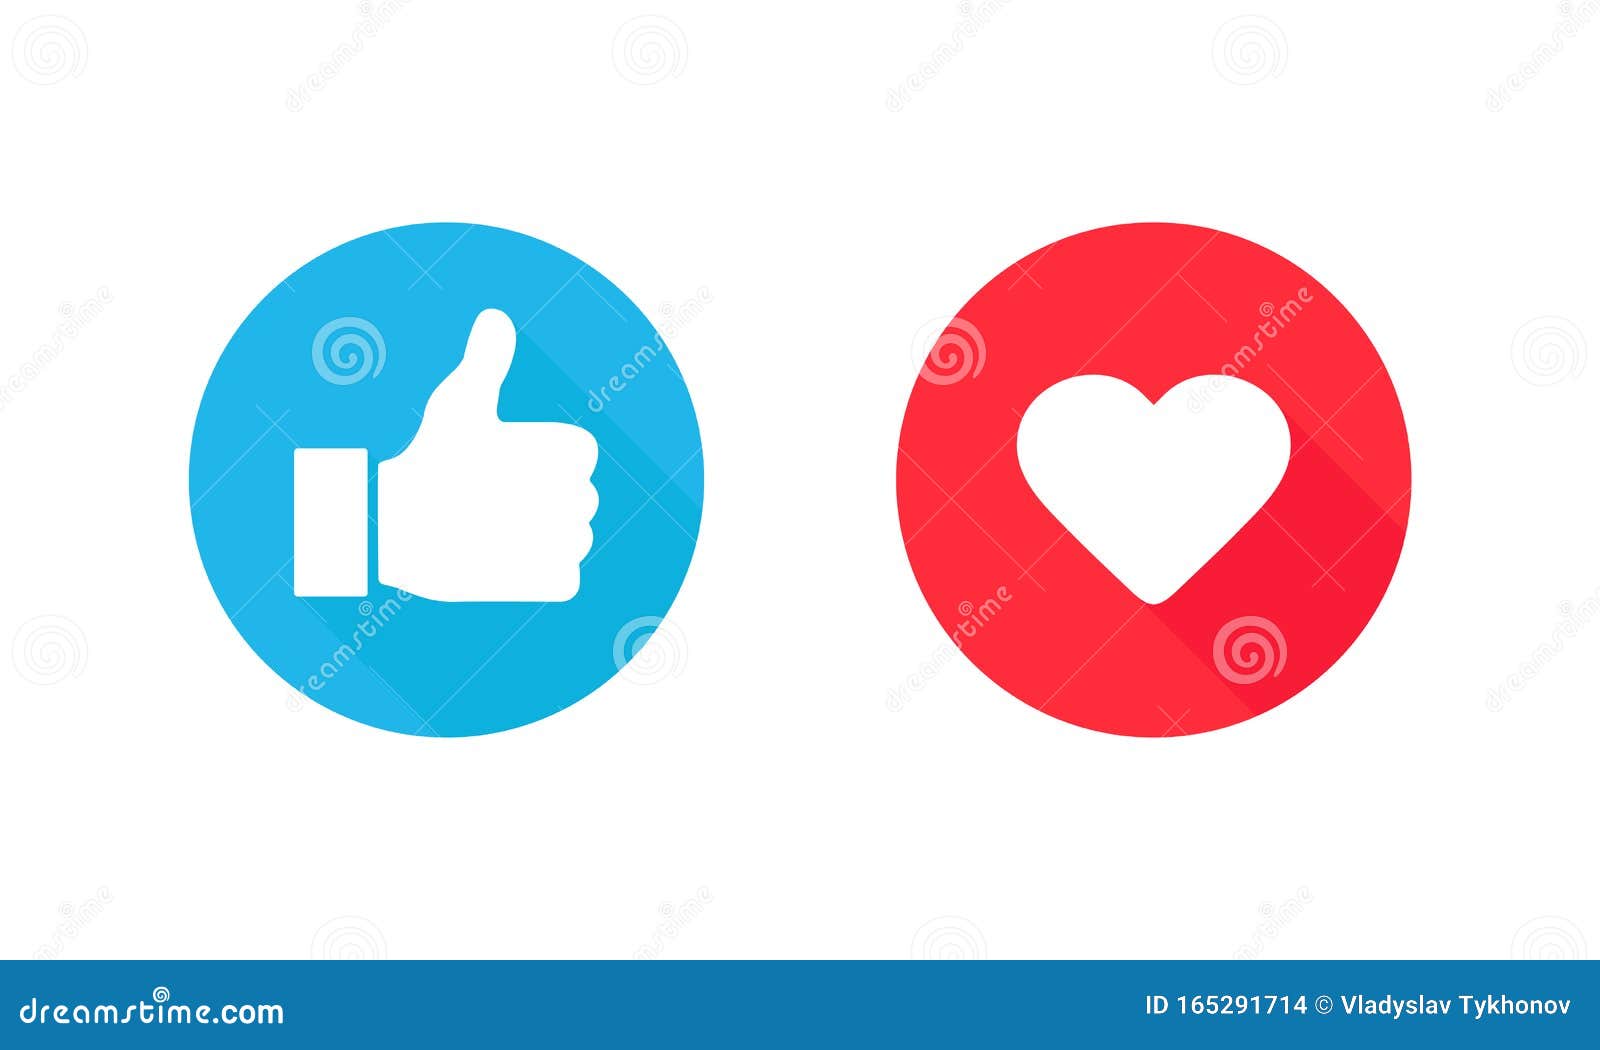 Emoji Reactions. Thumb Up Like, Love Heart, Haha Laughing, Wow ...